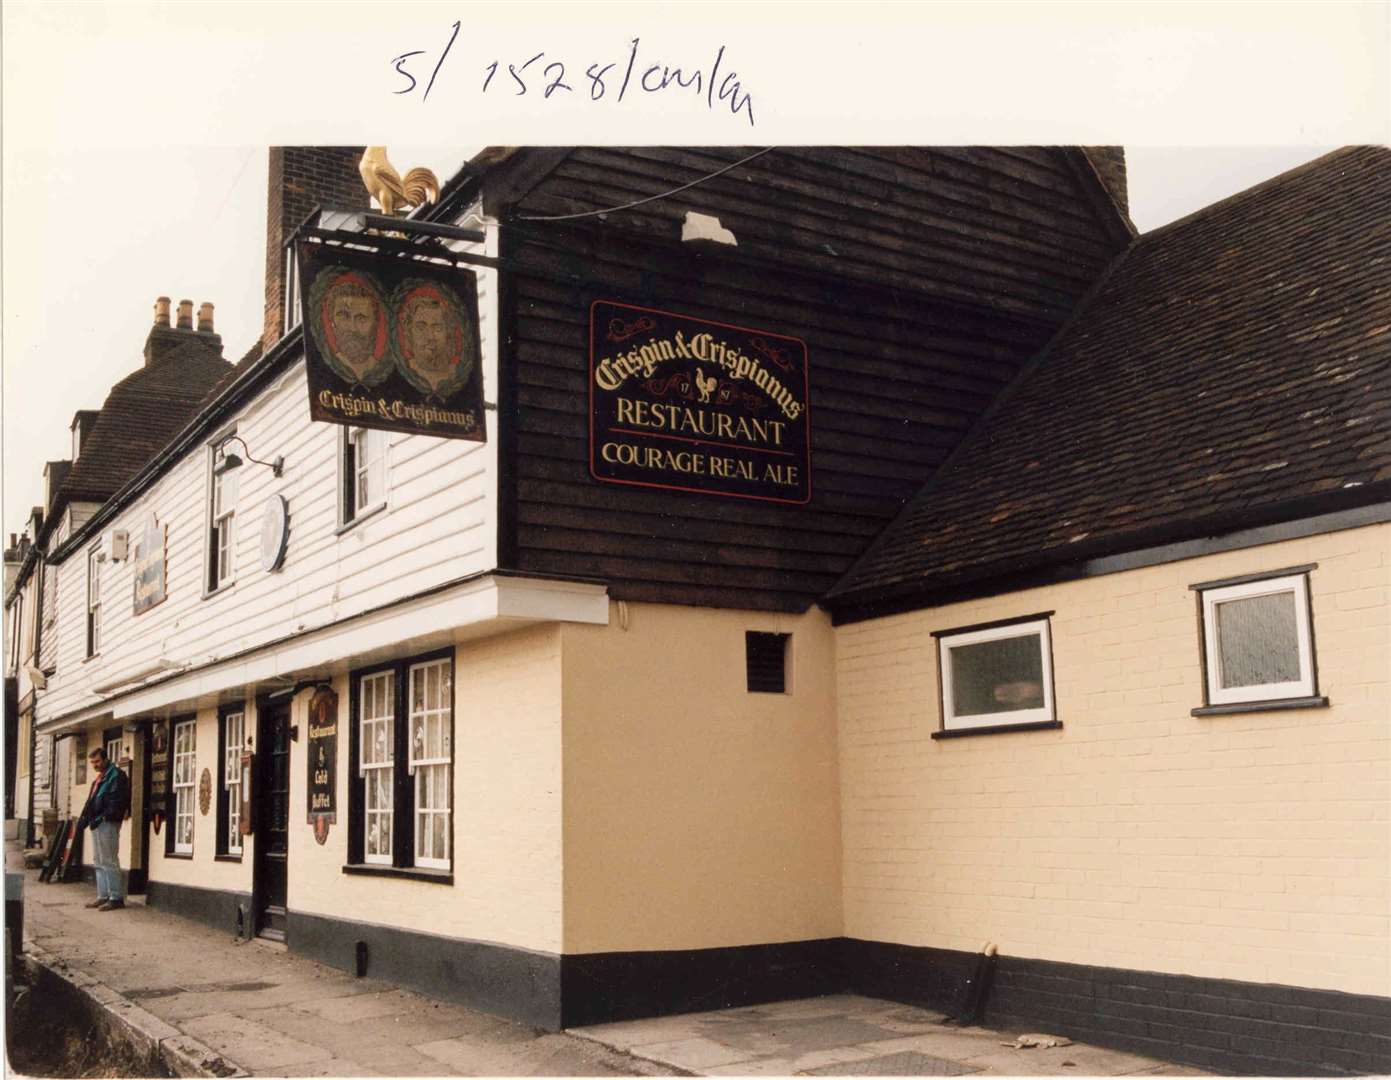 Crispin & Crispianus public house in Strood, April 1992